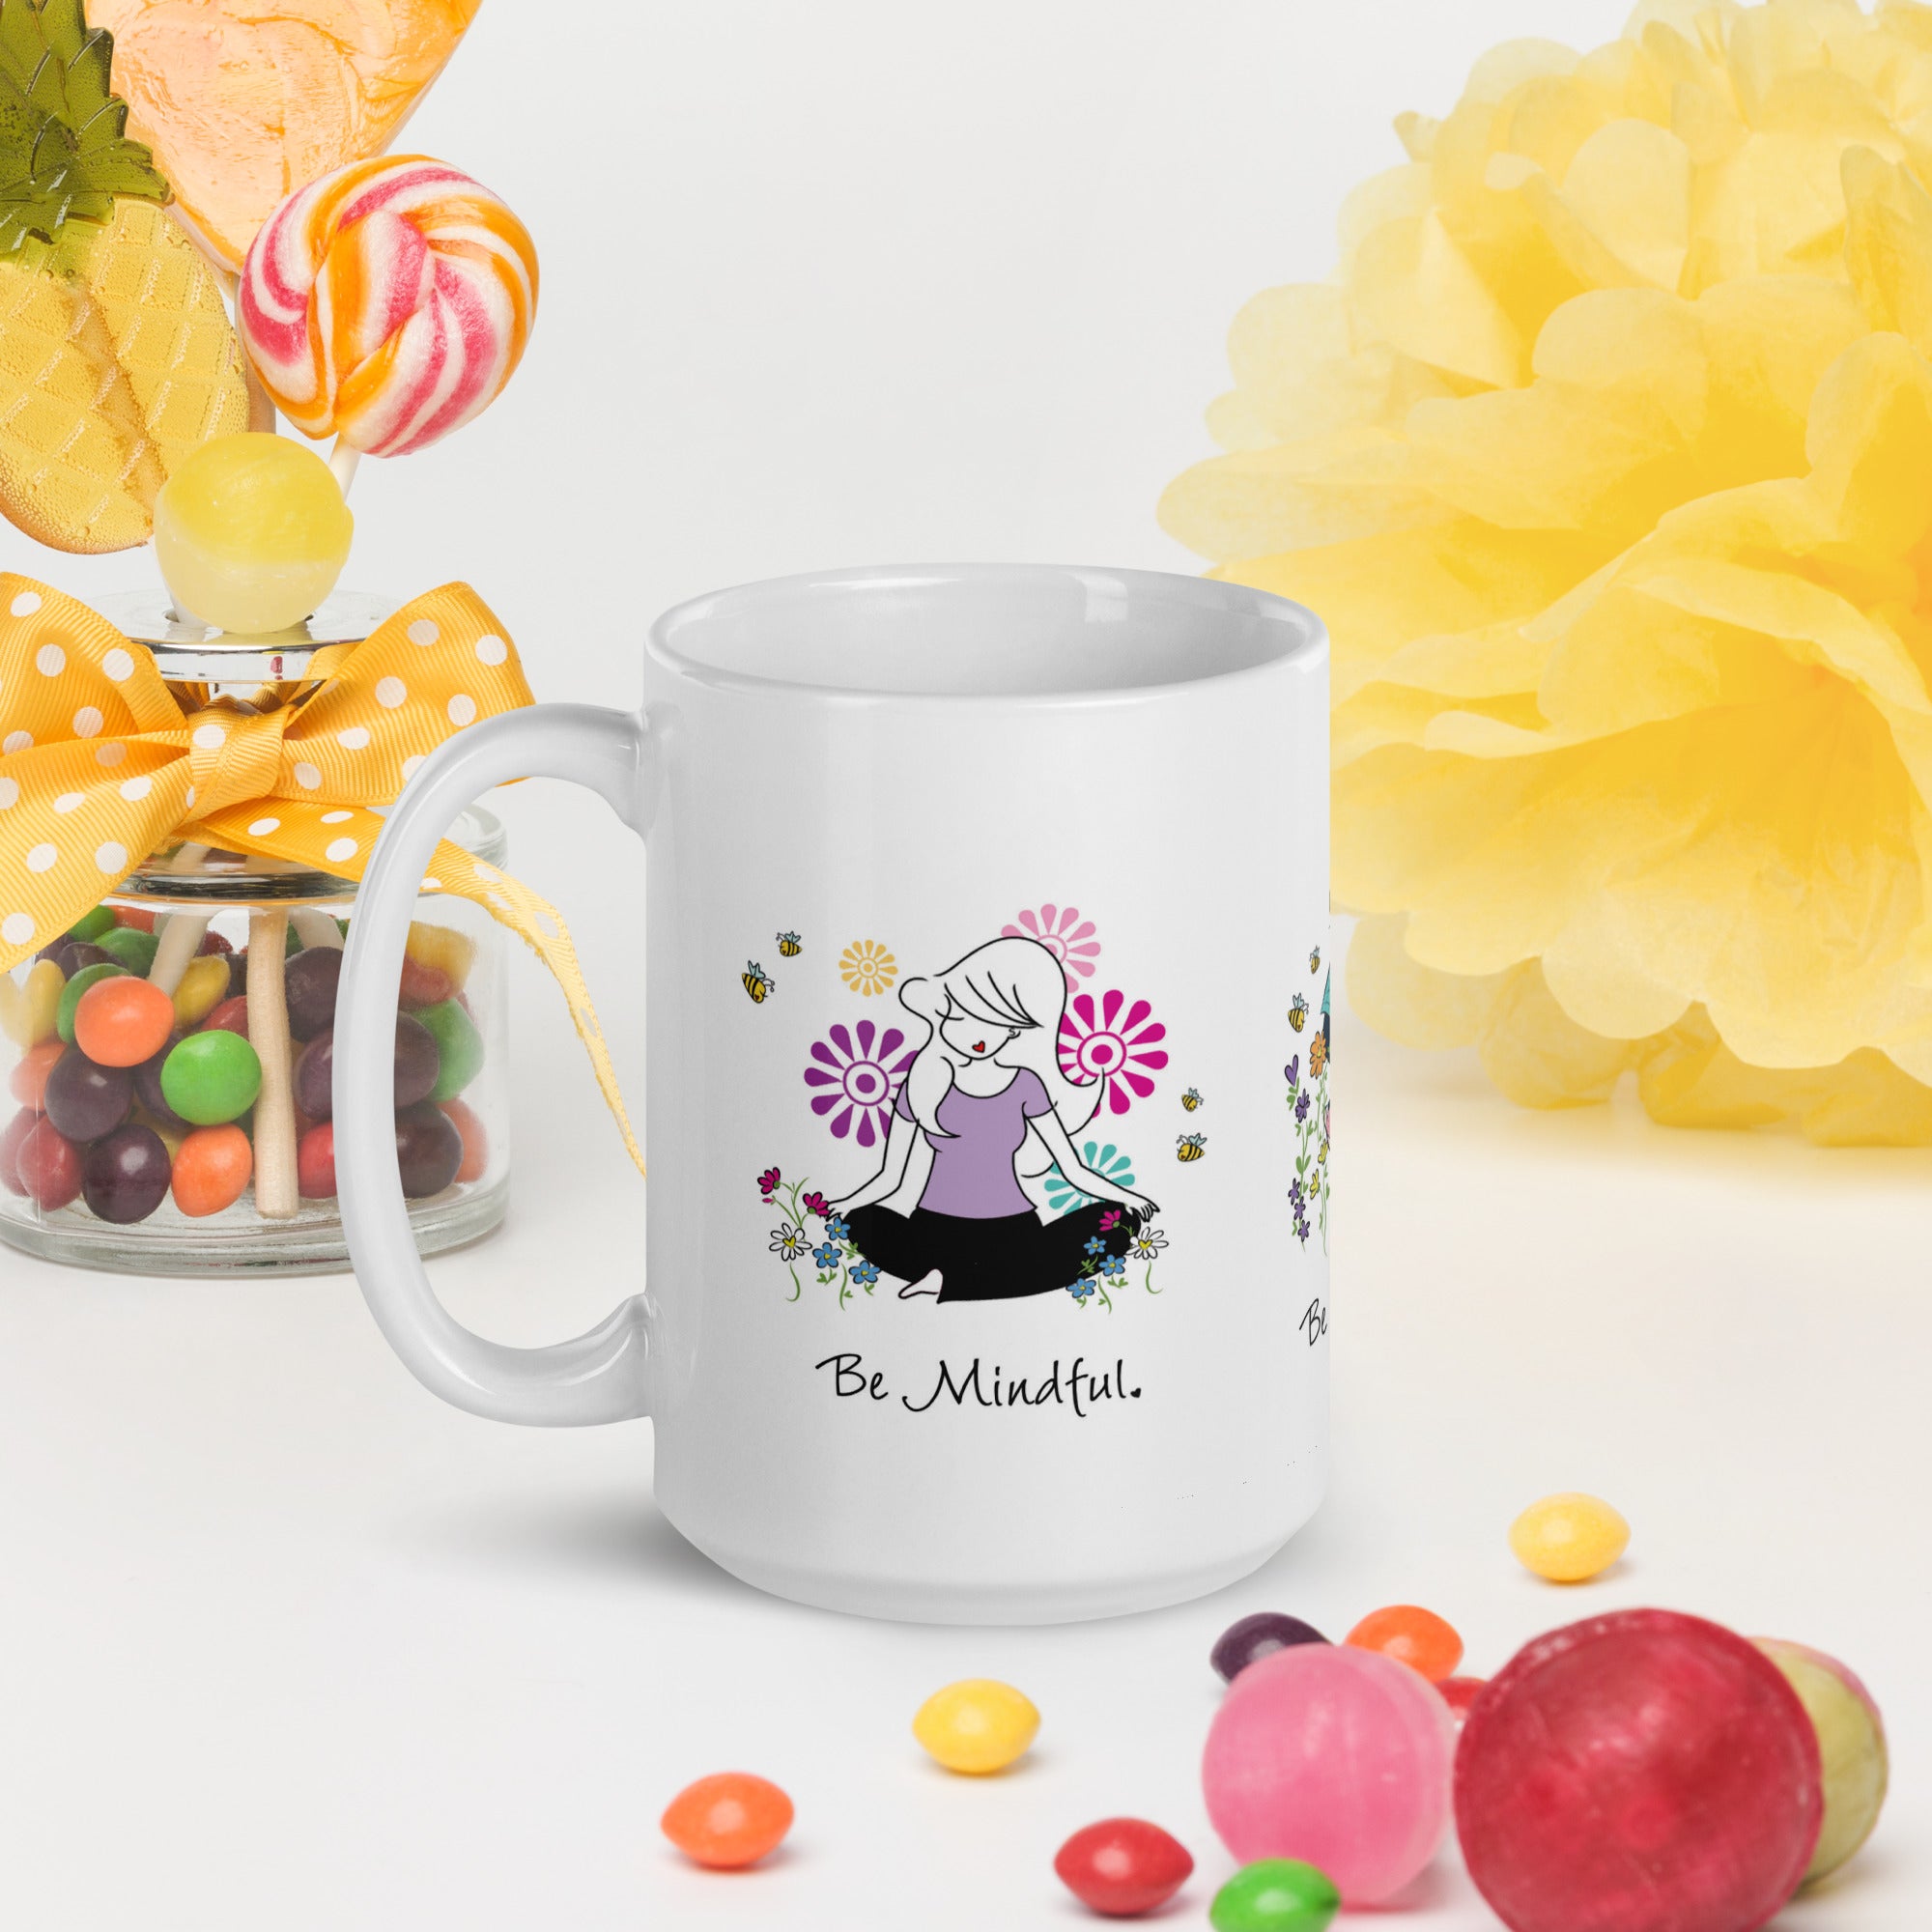 Inspirational Ceramic Mug - Happiness